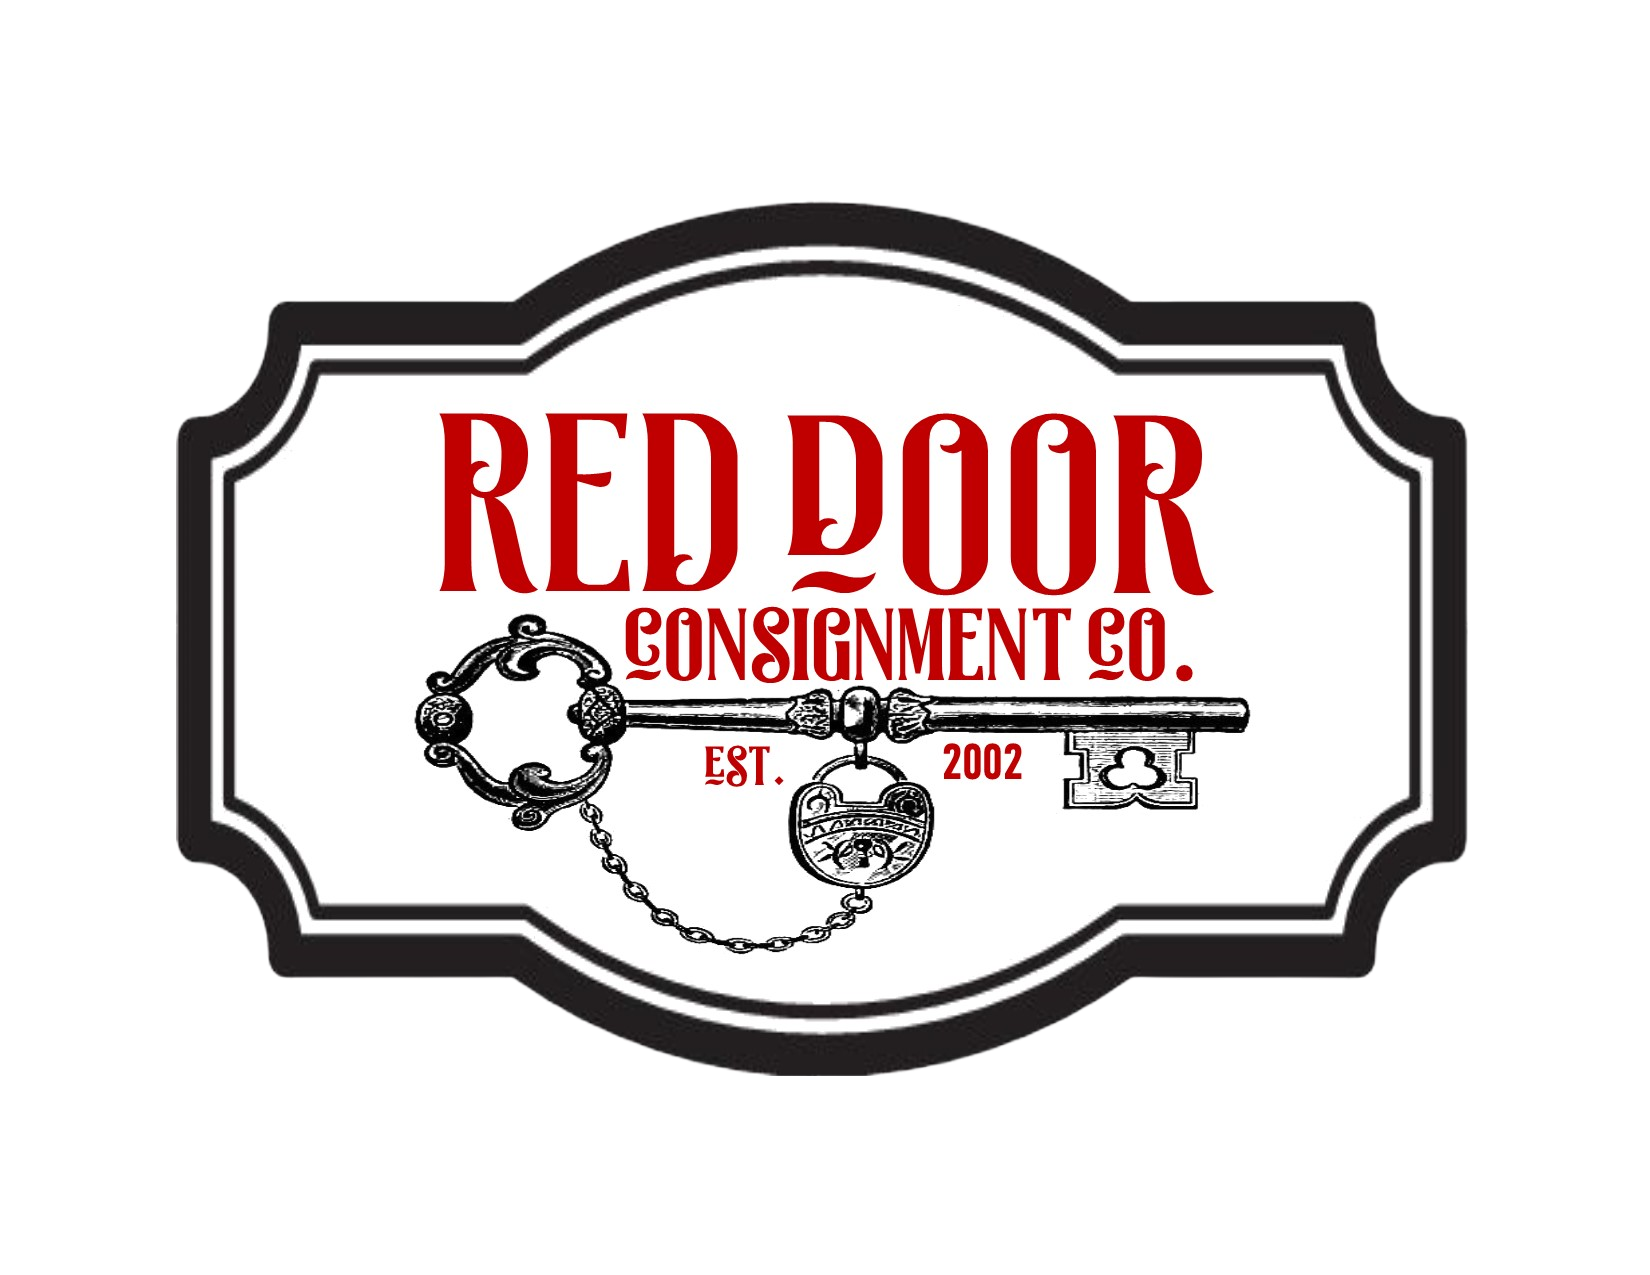 Red Door Consignment Co. 